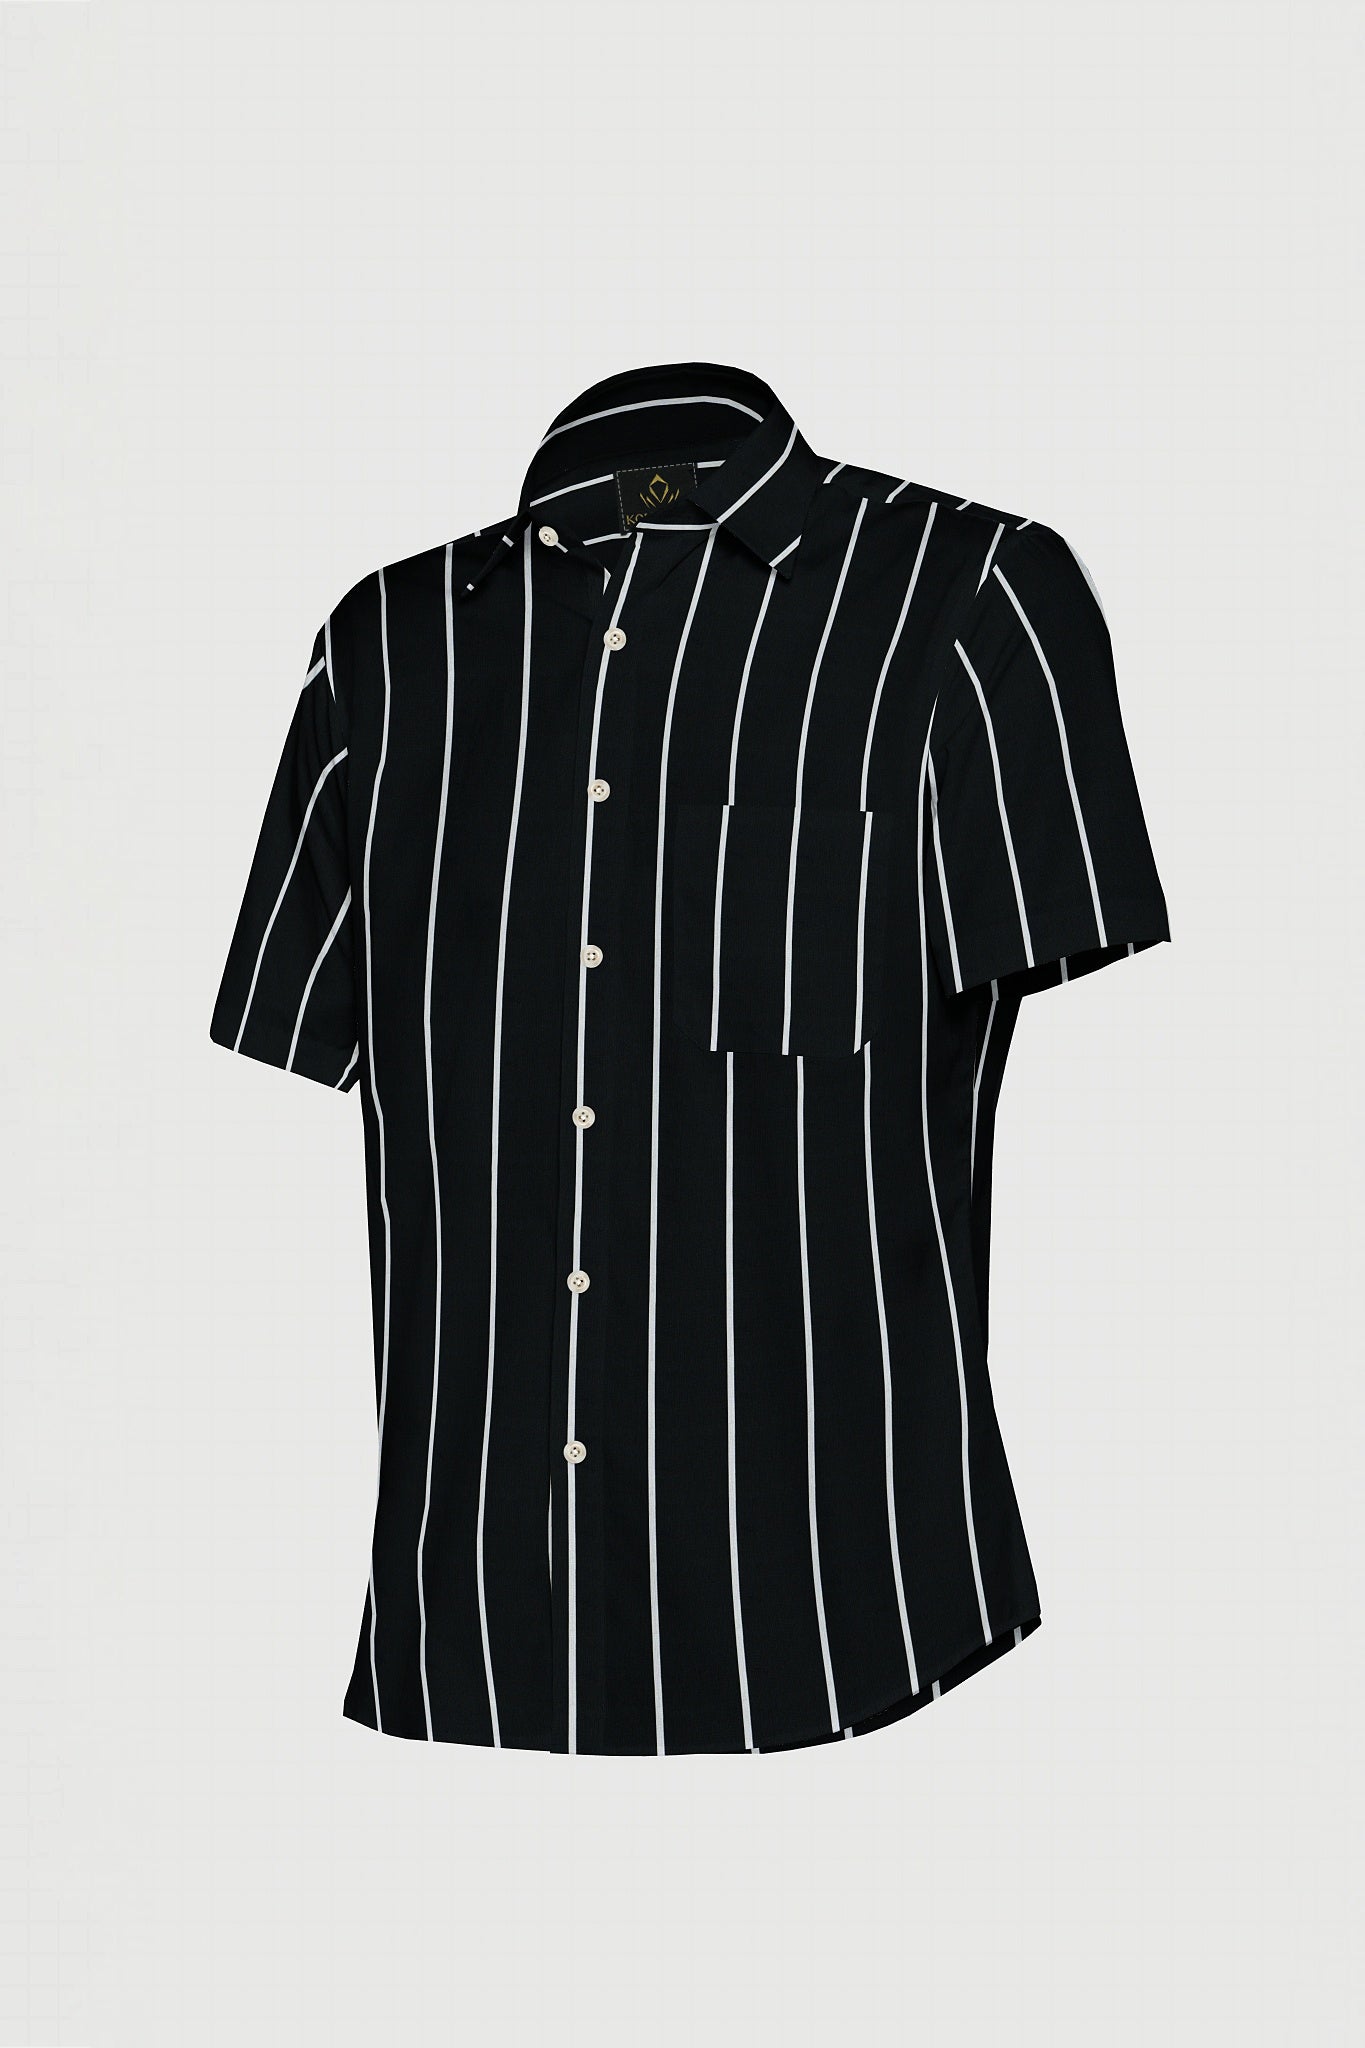 Jade Black and White Stripes Cotton Shirt